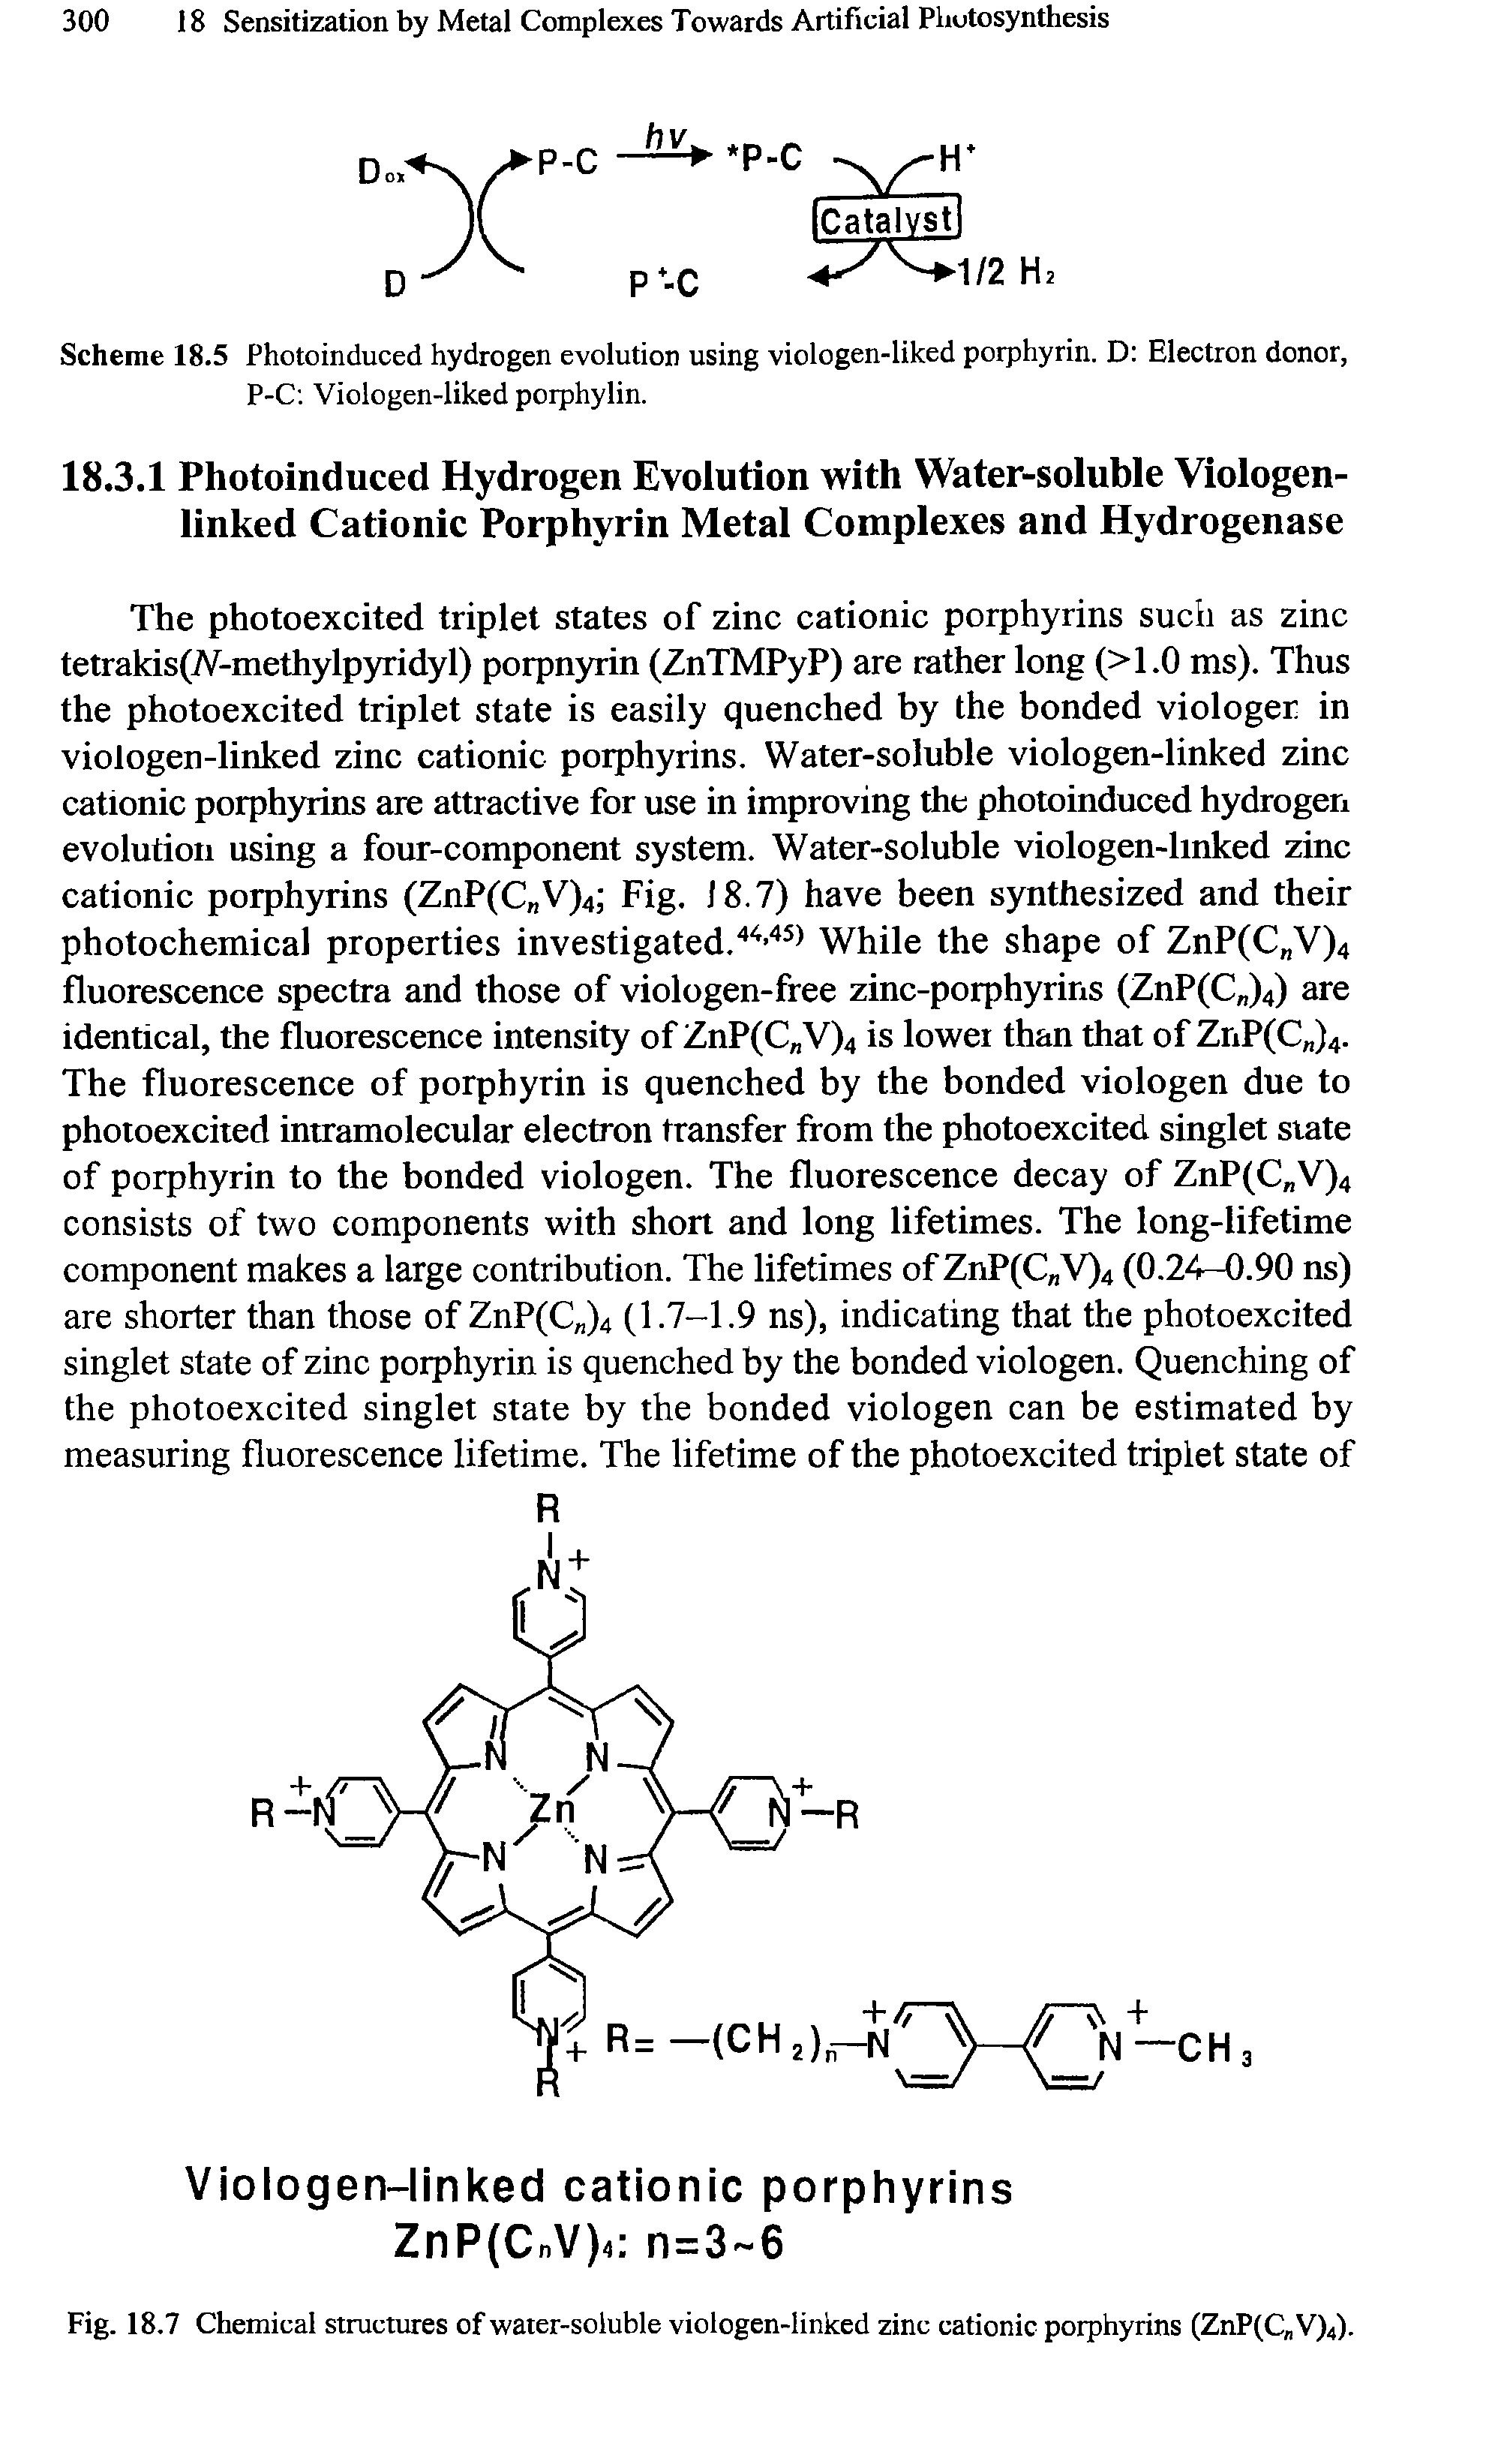 Fig. 18.7 Chemical structures of water-soluble viologen-linked zinc cationic porphyrins (ZnP(C V)4).